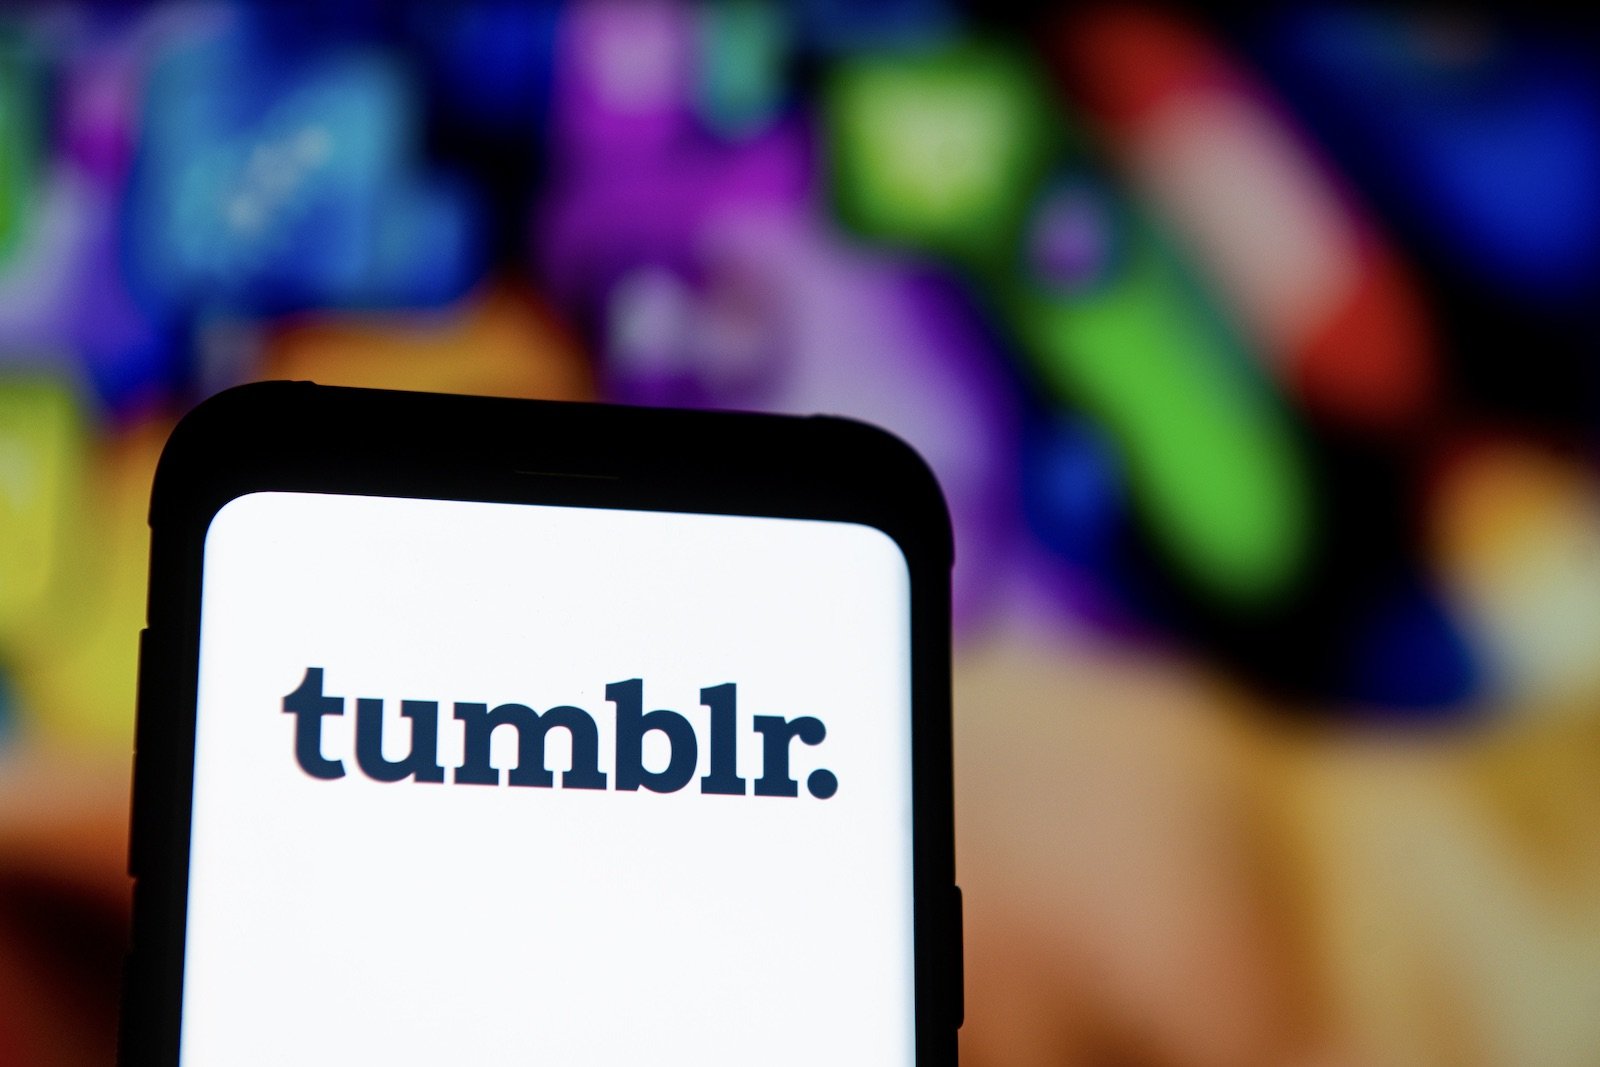 Tumblr logo on phone